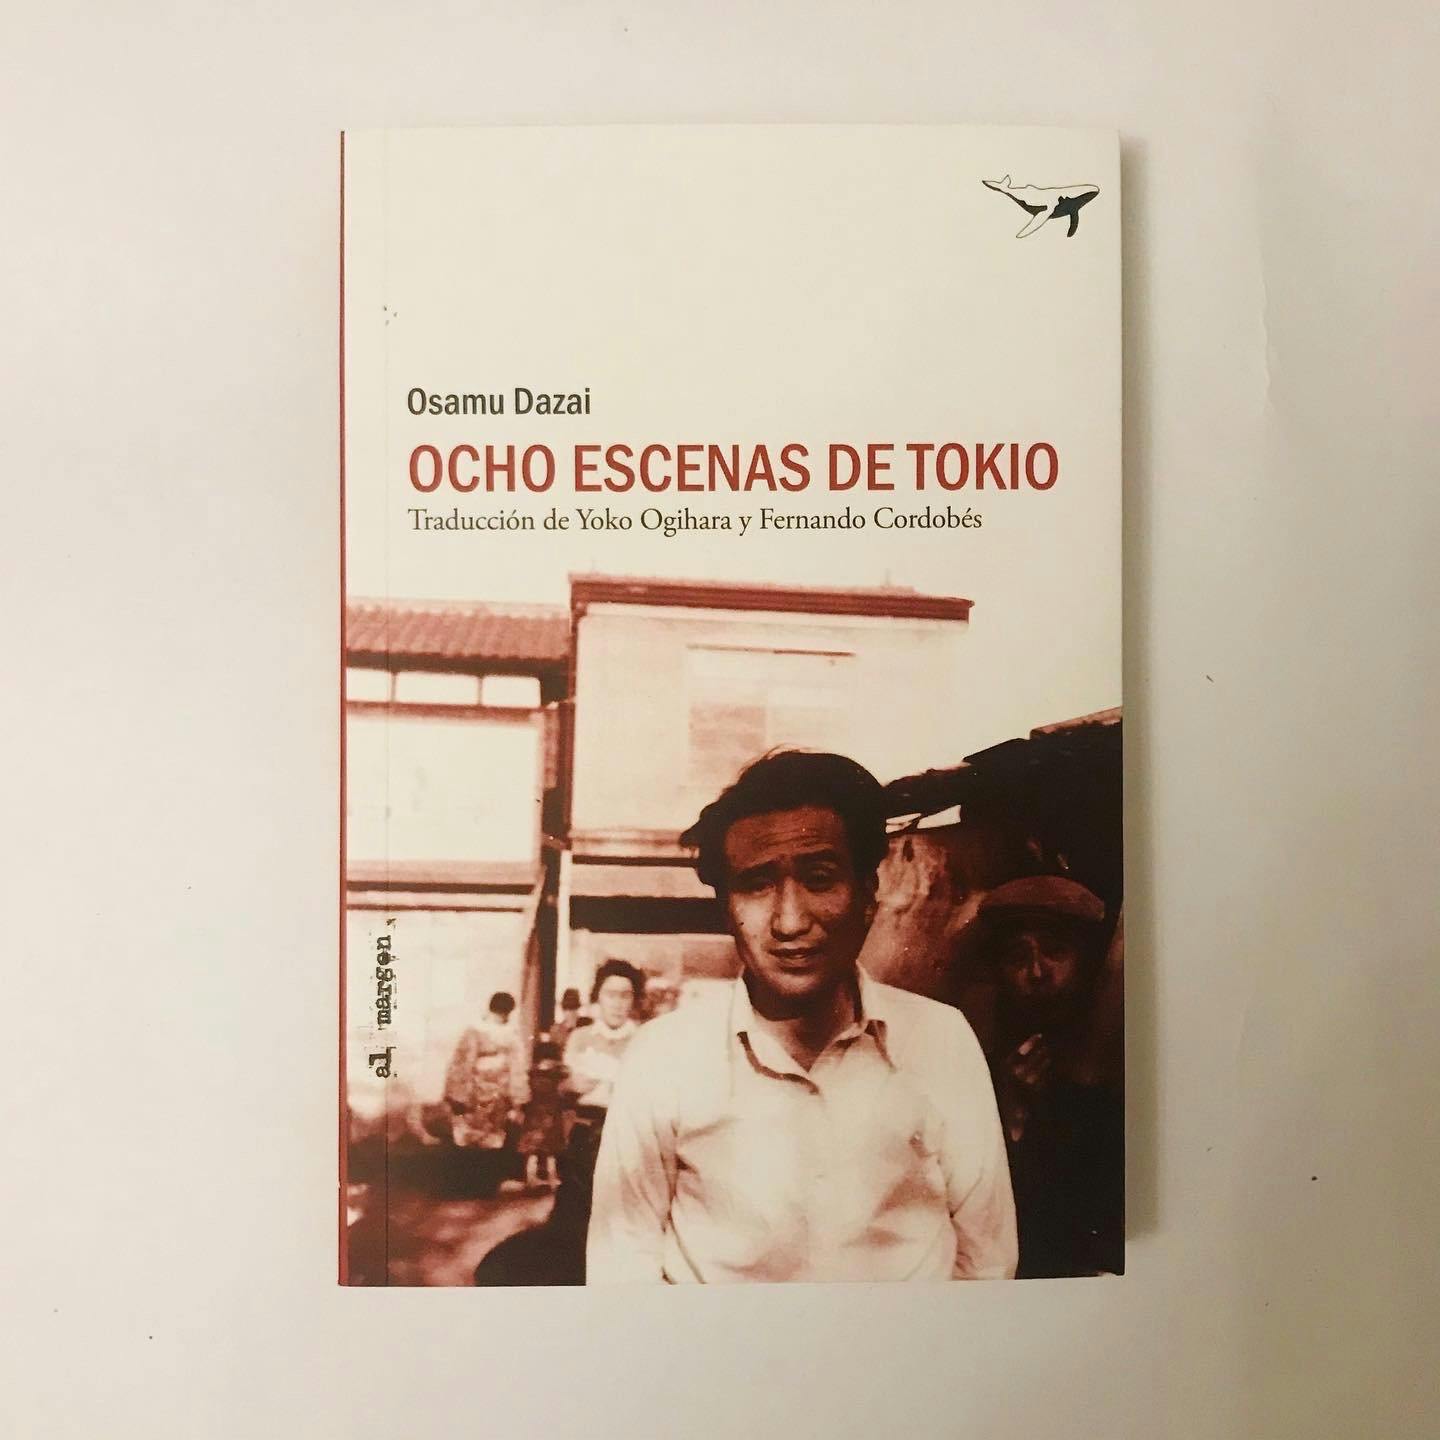 “OCHO ESCENAS DE TOKIO”, de Osamu Dazai